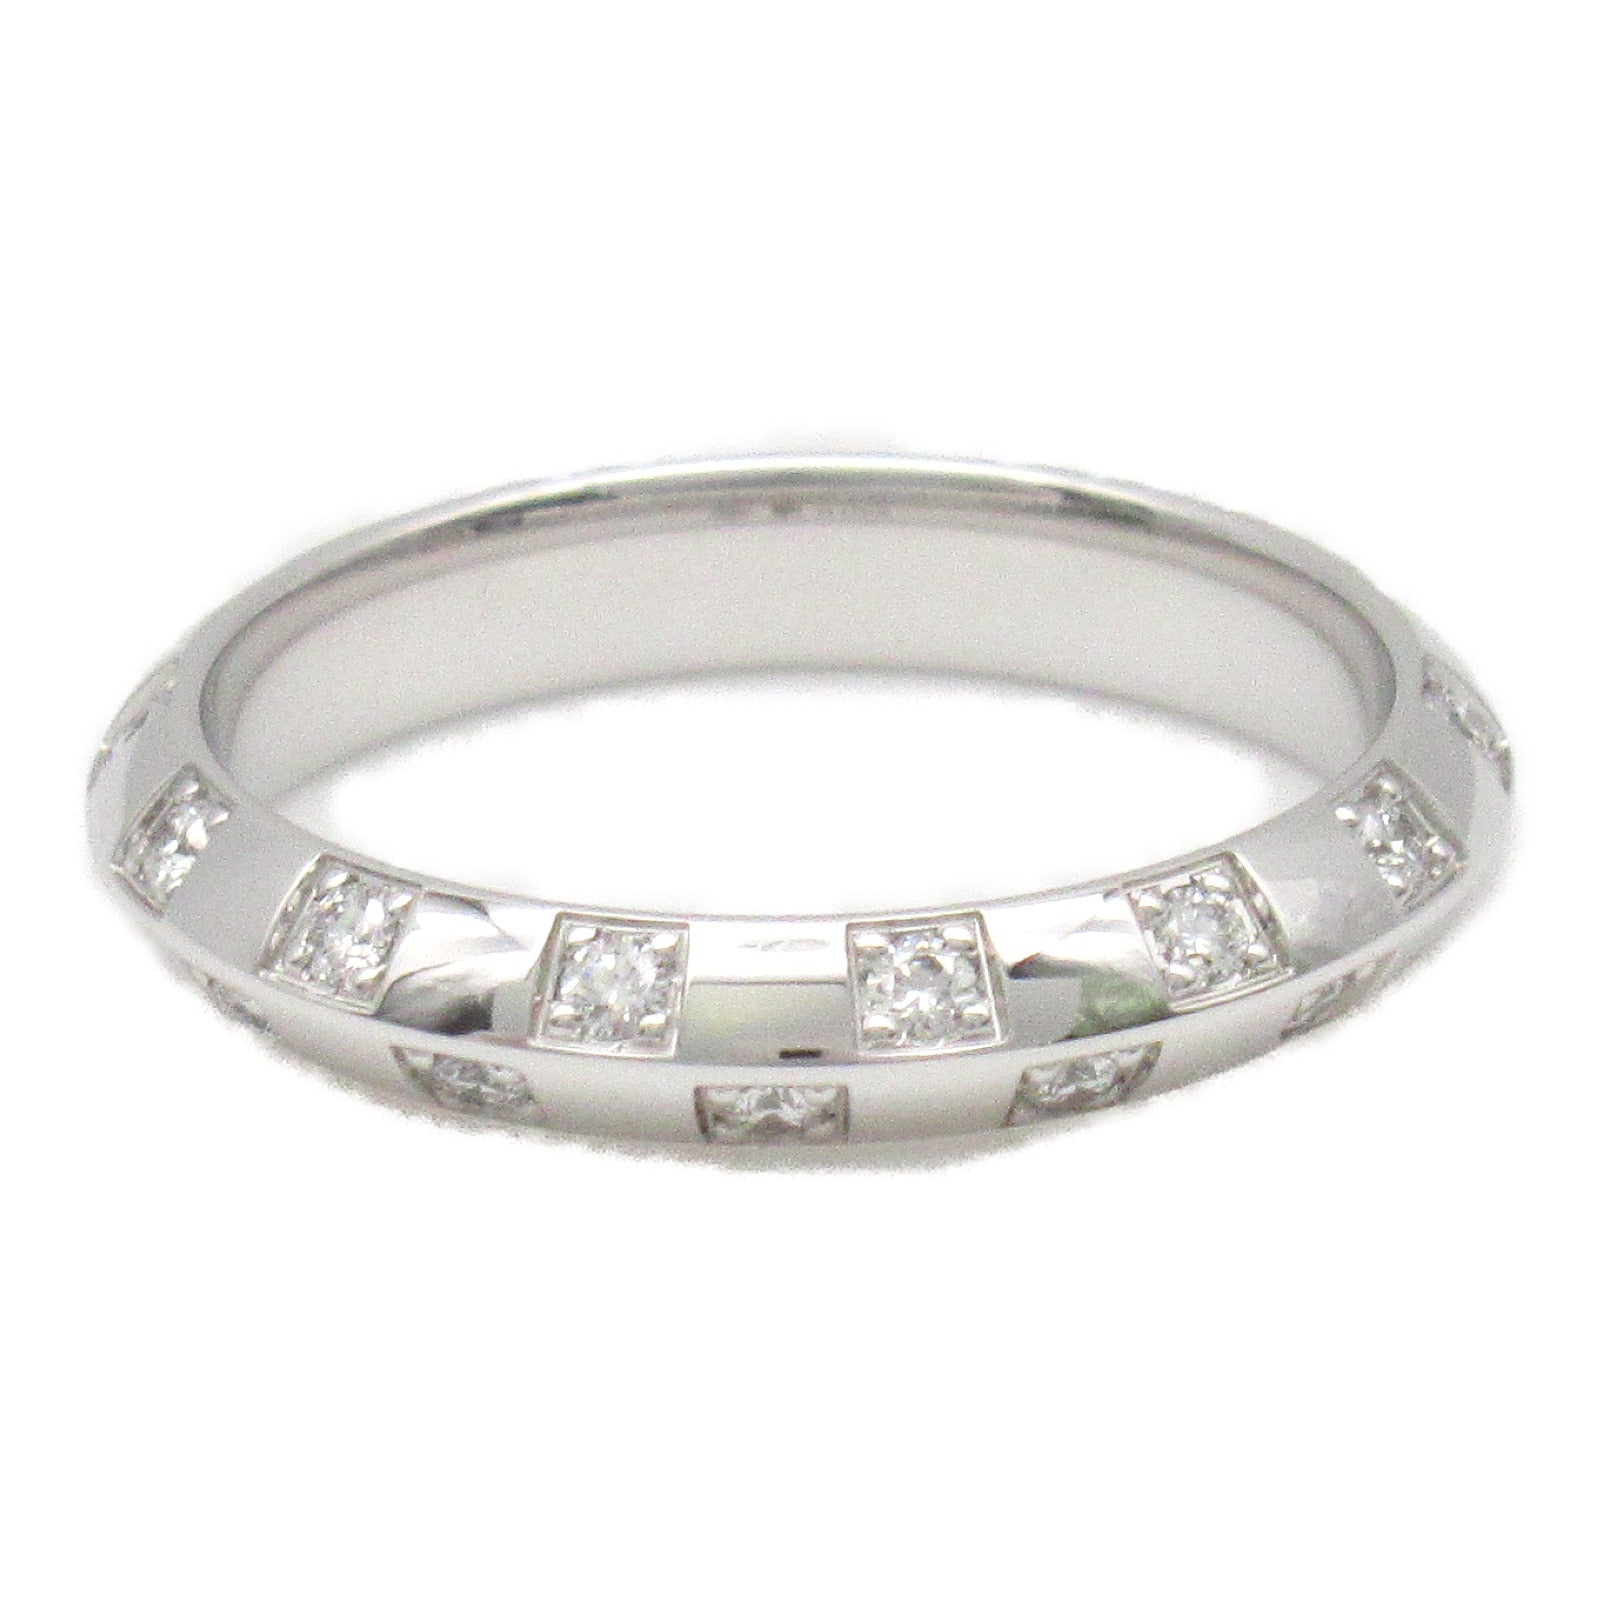 Louis Vuitton Louis Vuitton Diamond Ring Ring Jewelry K18WG (White G) Diamond  Clear Q9Y55G